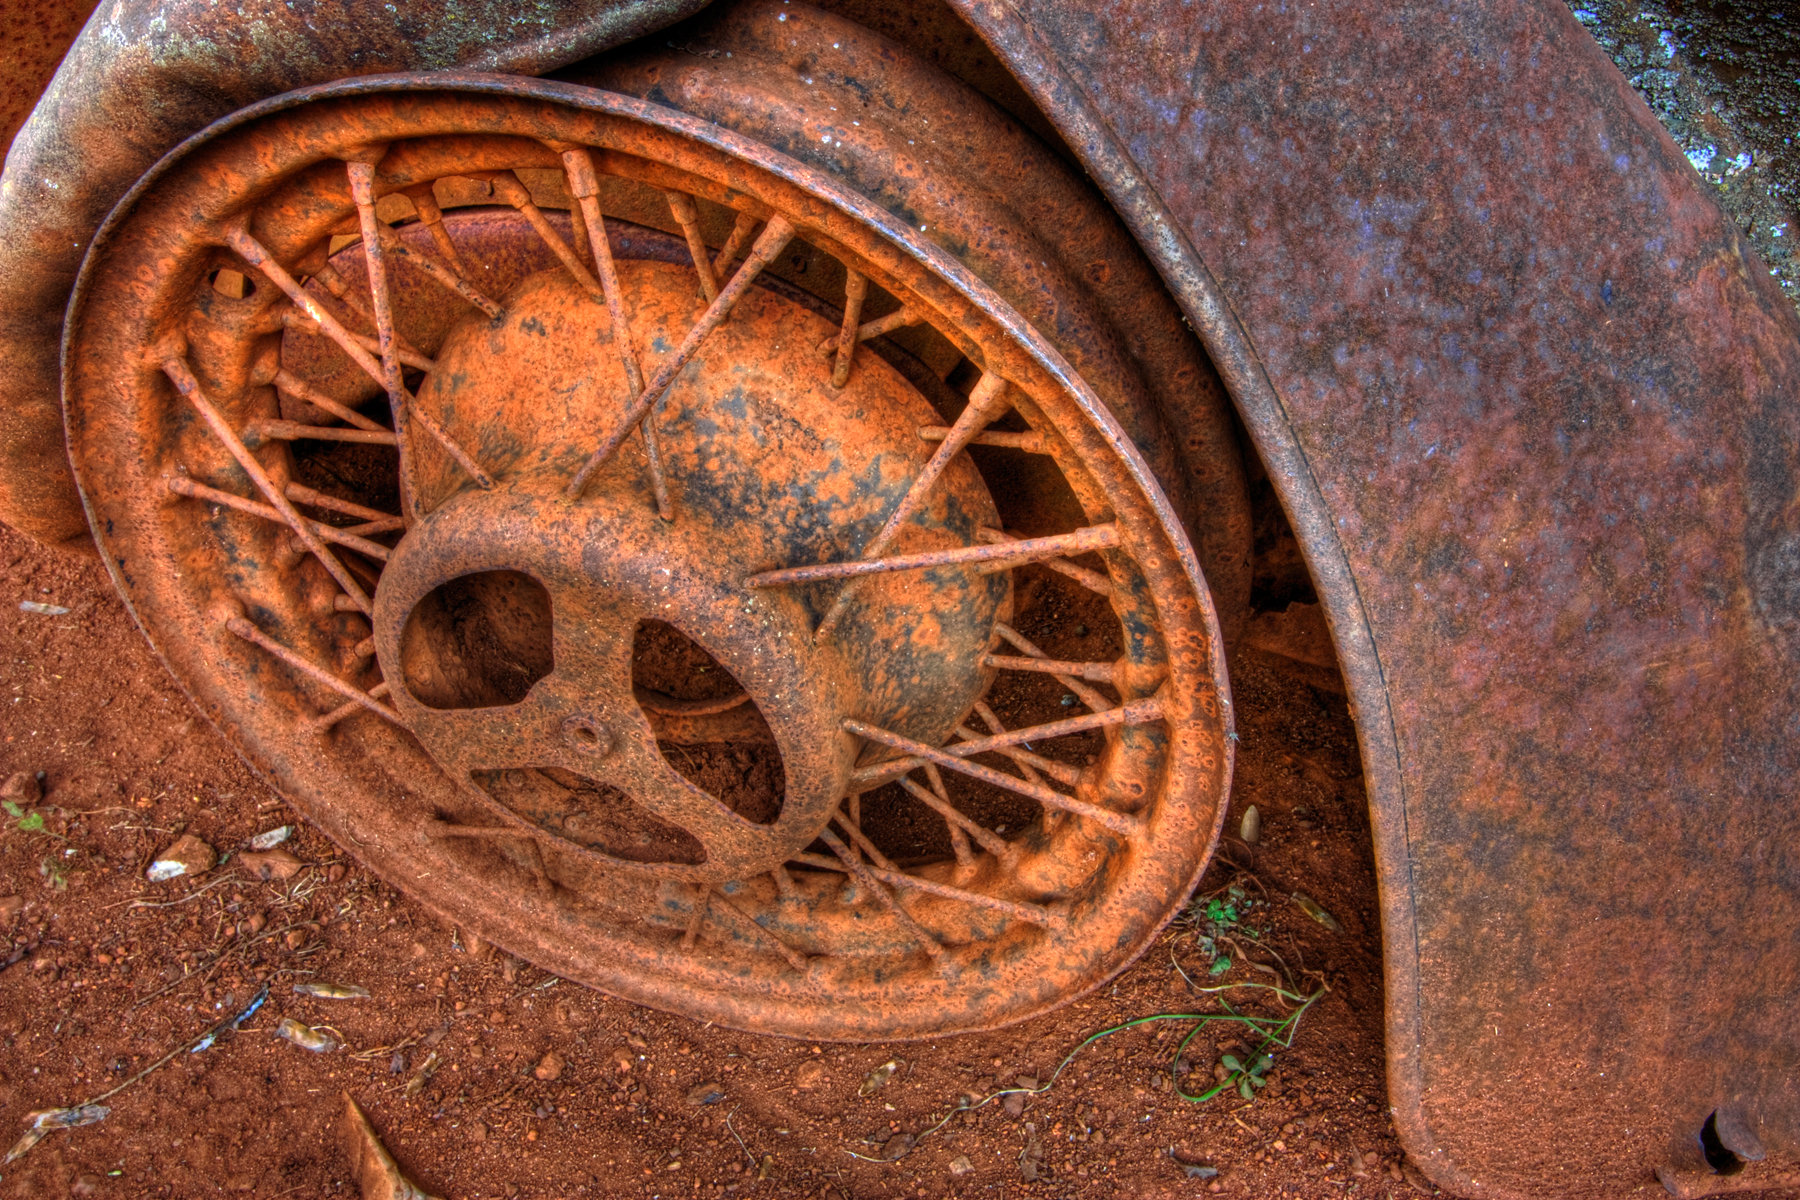 Rusted Wheel - HDR by somadjinn on DeviantArt